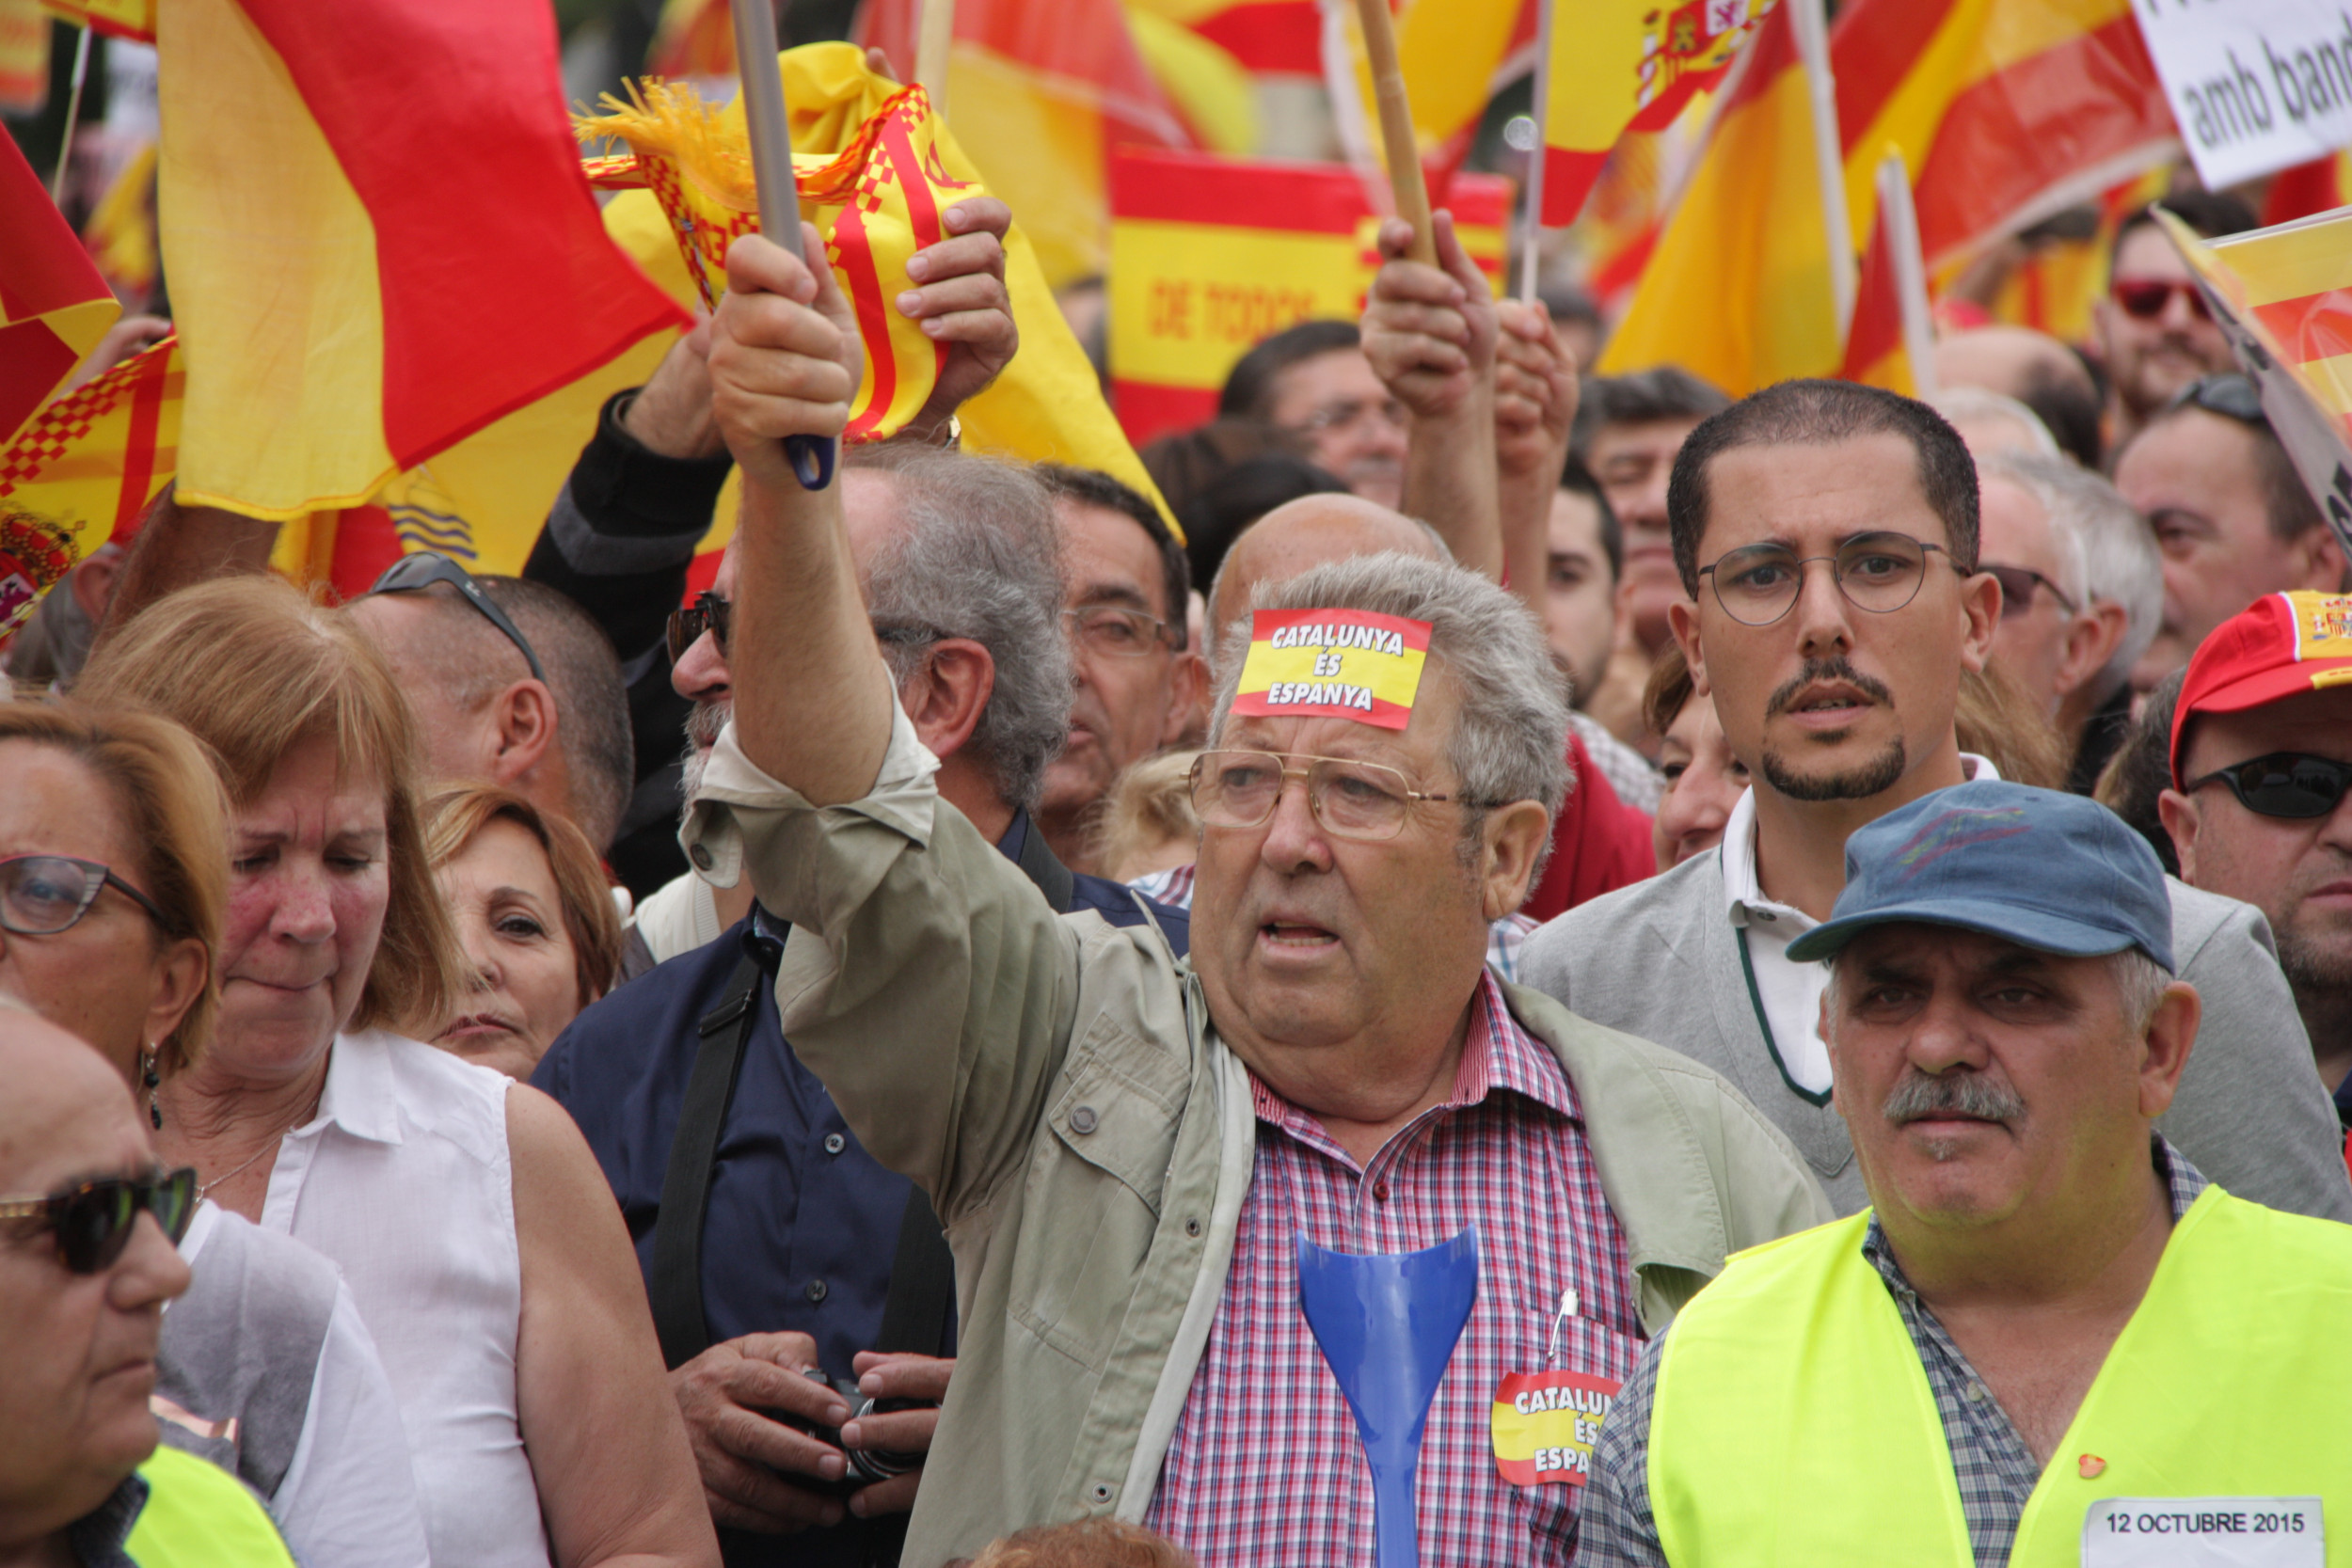 Demonstrators in Barcelona this morning, celebrating Spain's National Day